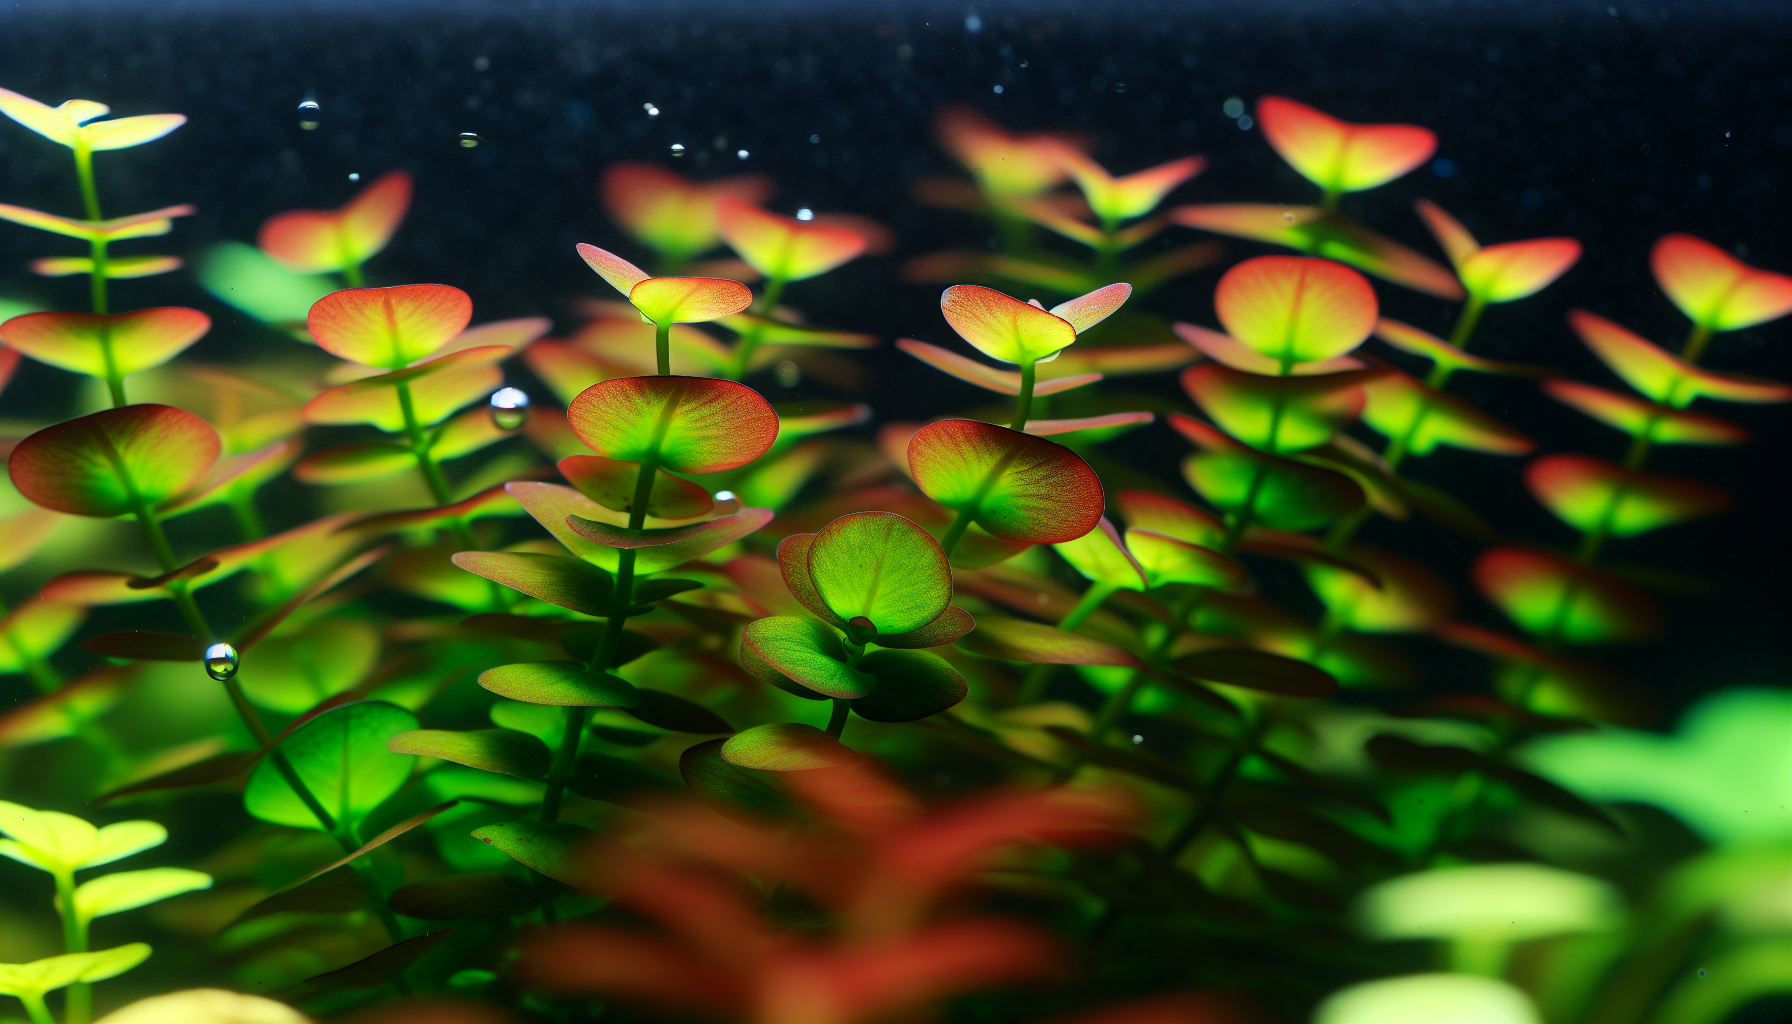 Vibrant and colorful Ludwigia Repens in an aquarium